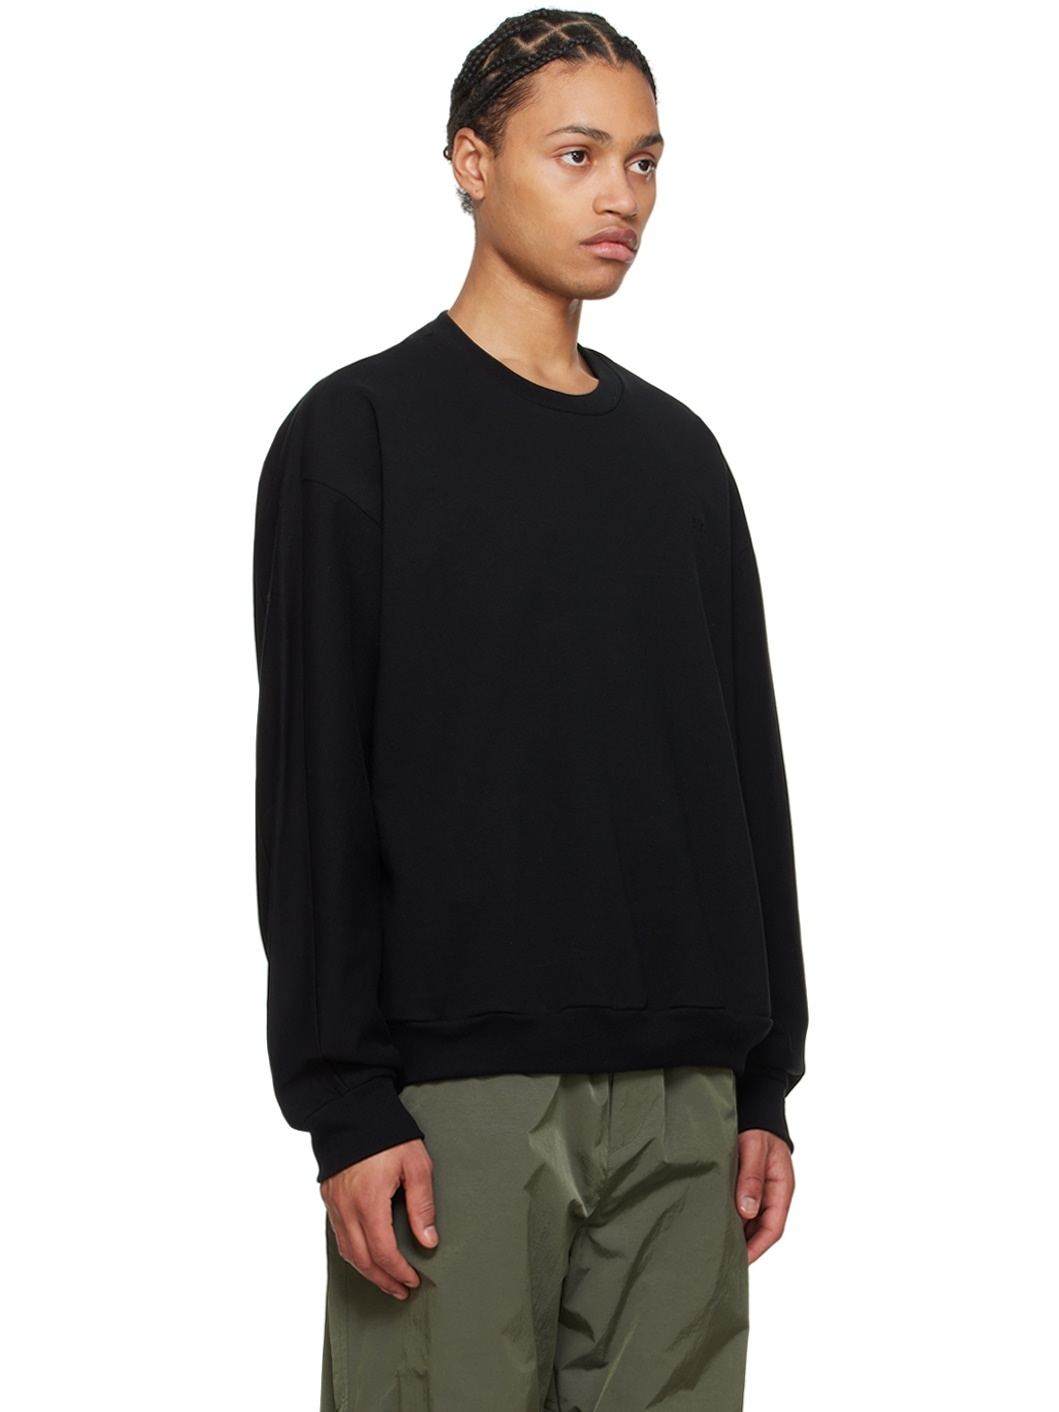 Black Embroidered Sweatshirt - 2